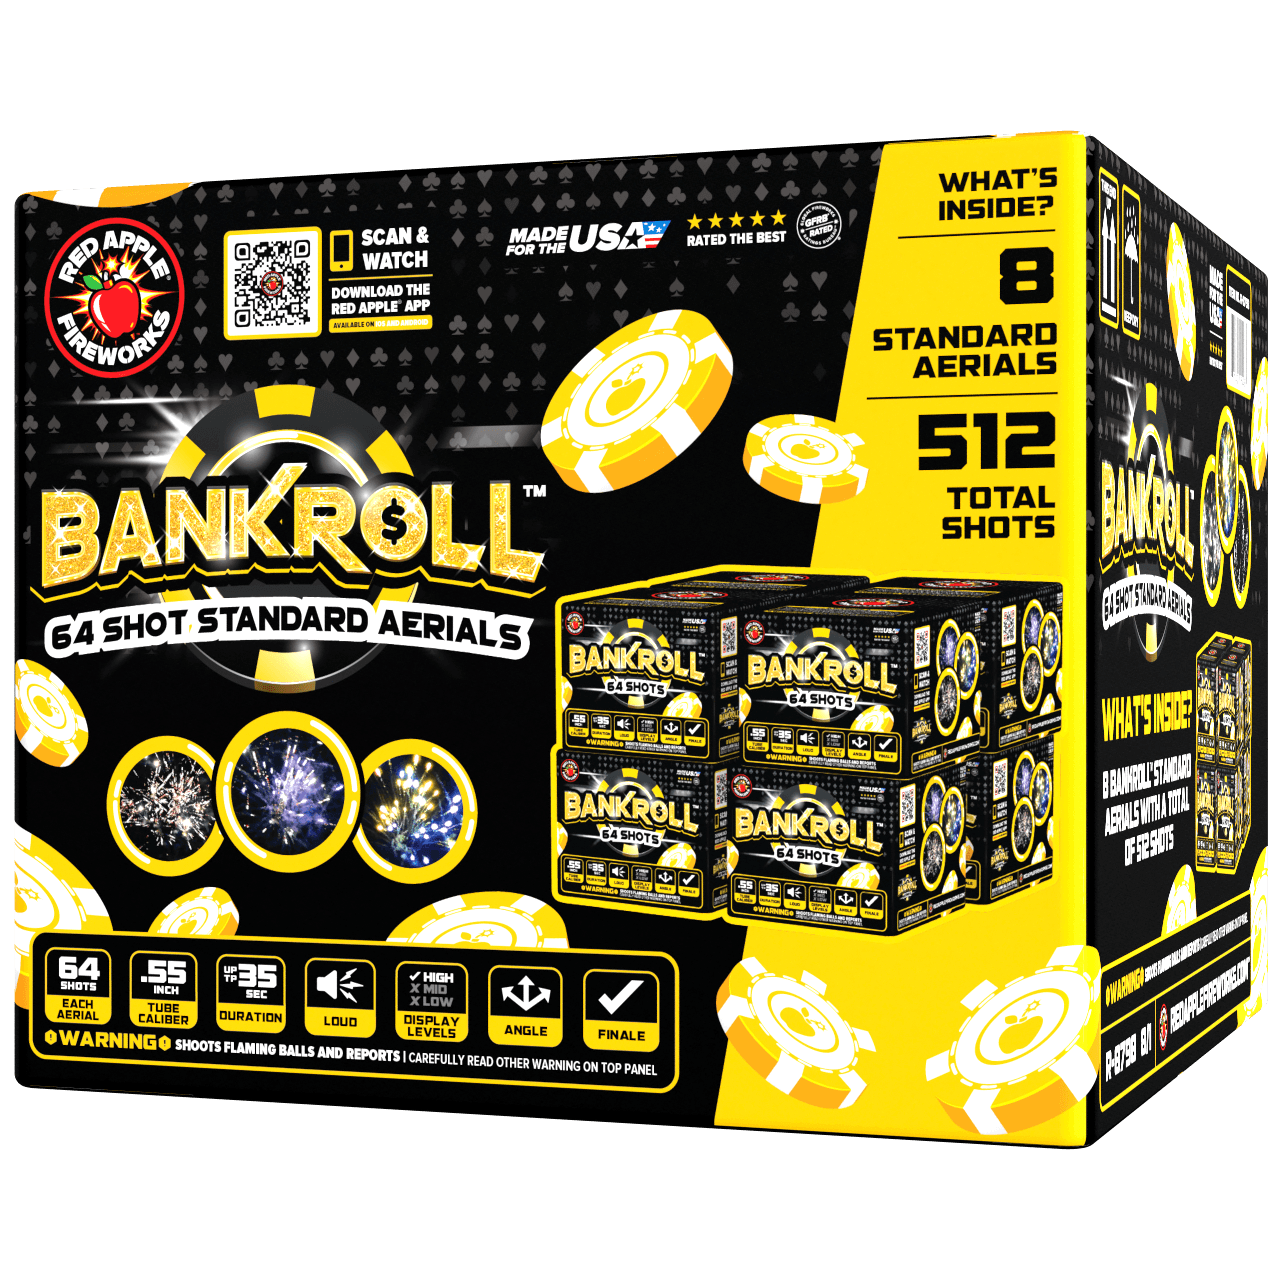 Bankroll™ 64 Shots Standard Aerial